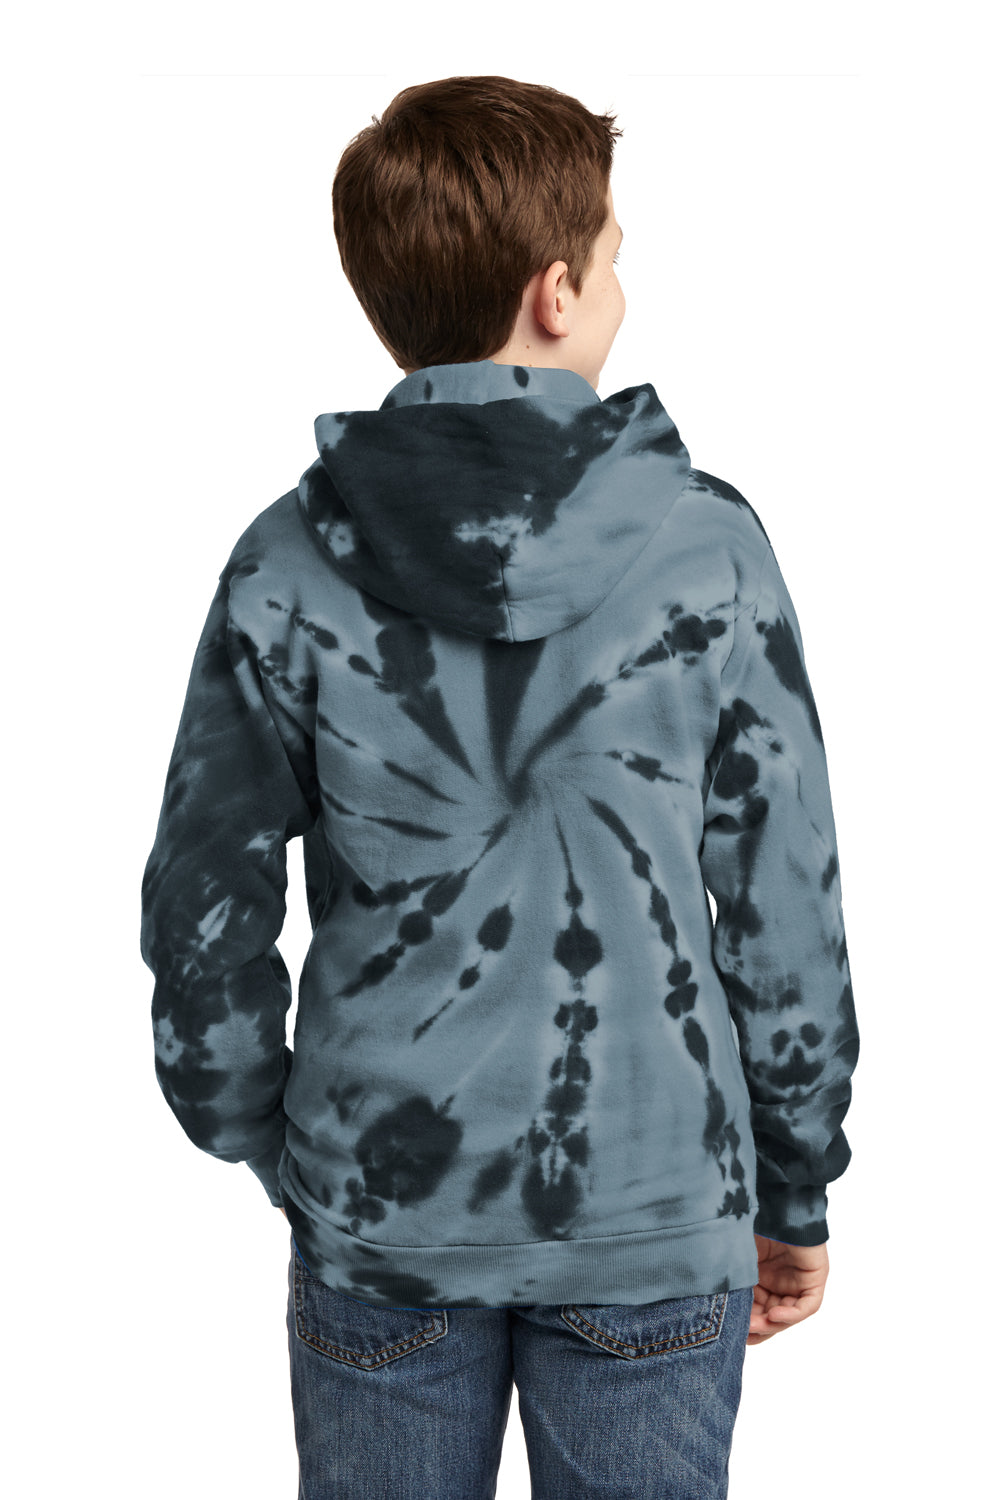 Port & Company PC146Y Youth Tie-Dye Fleece Hooded Sweatshirt Hoodie Black Back